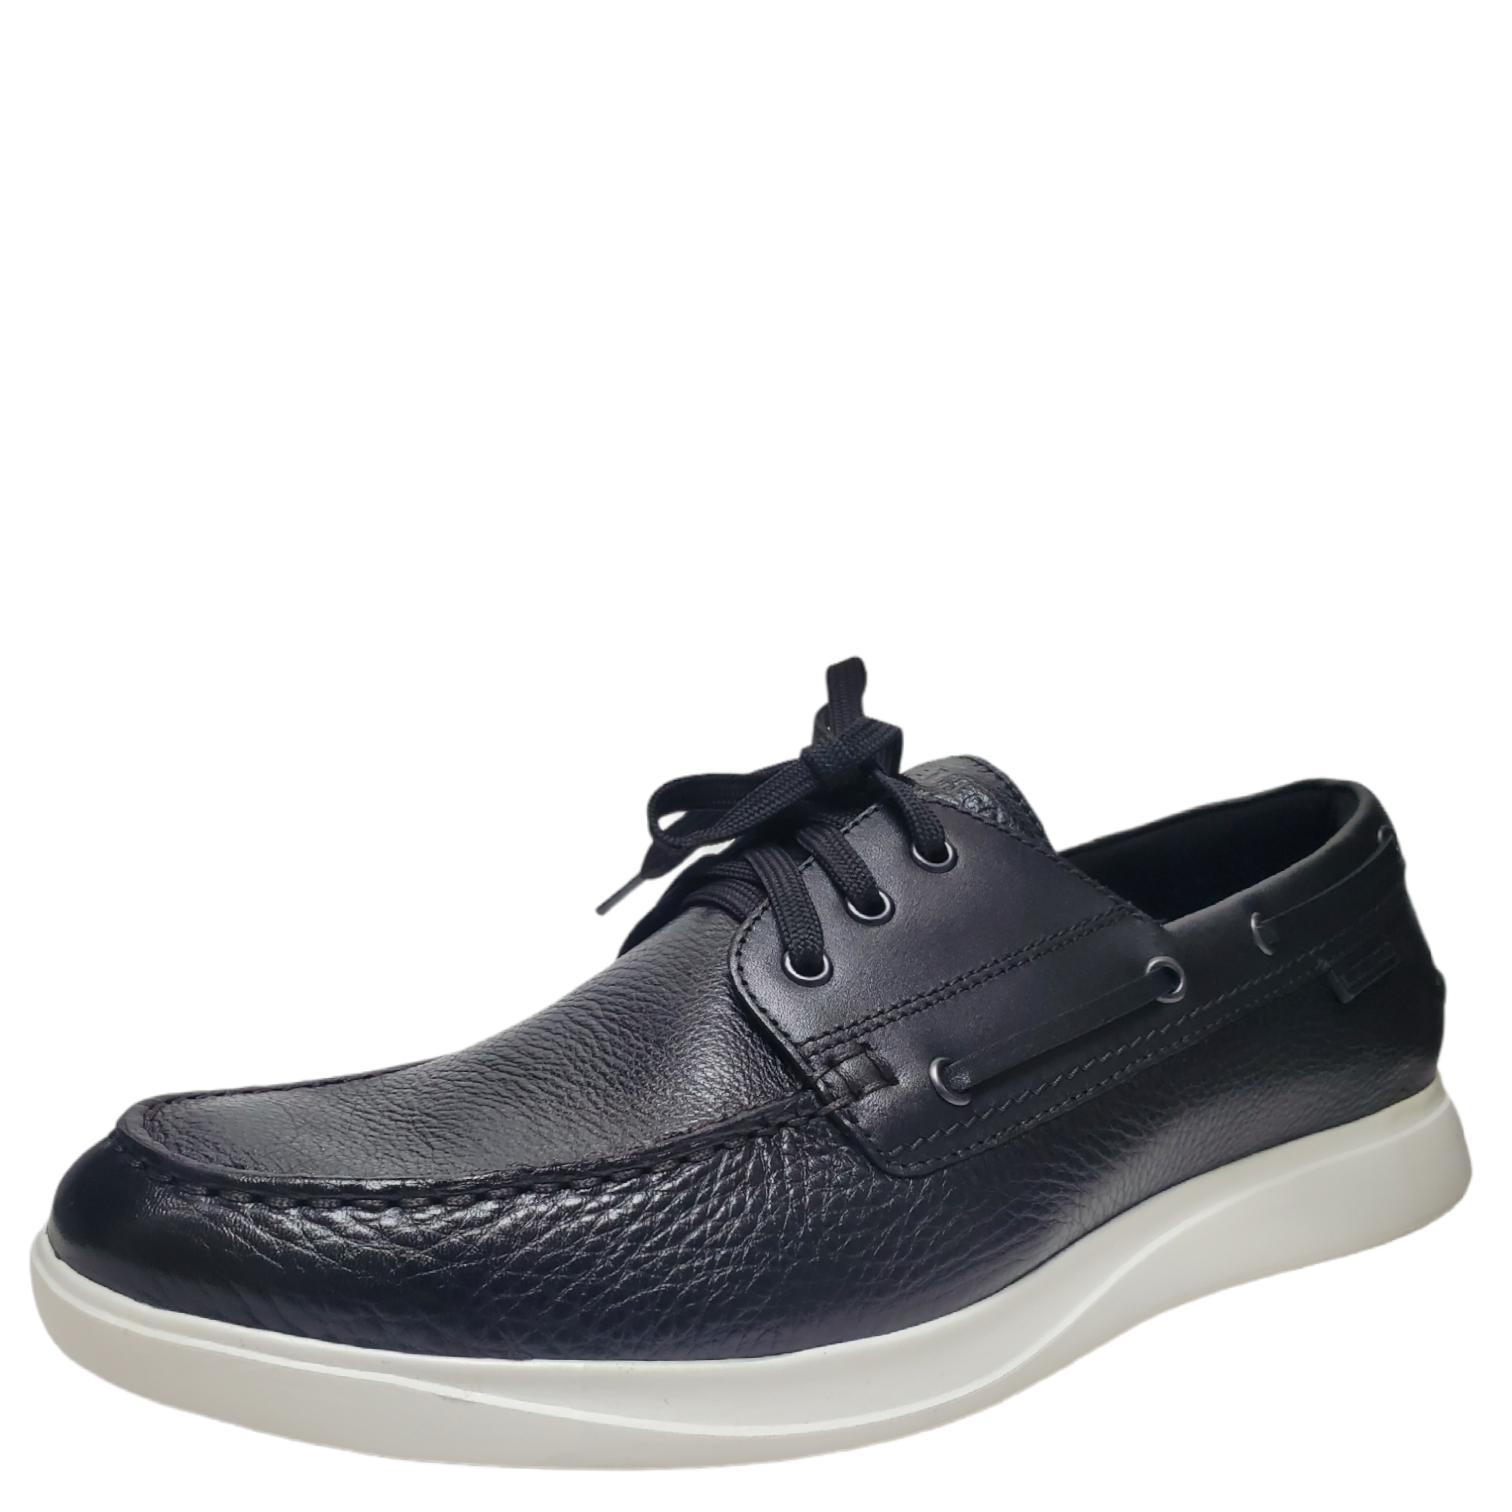 Kenneth Cole New York Men's Rocketpod Boat Shoes - Black